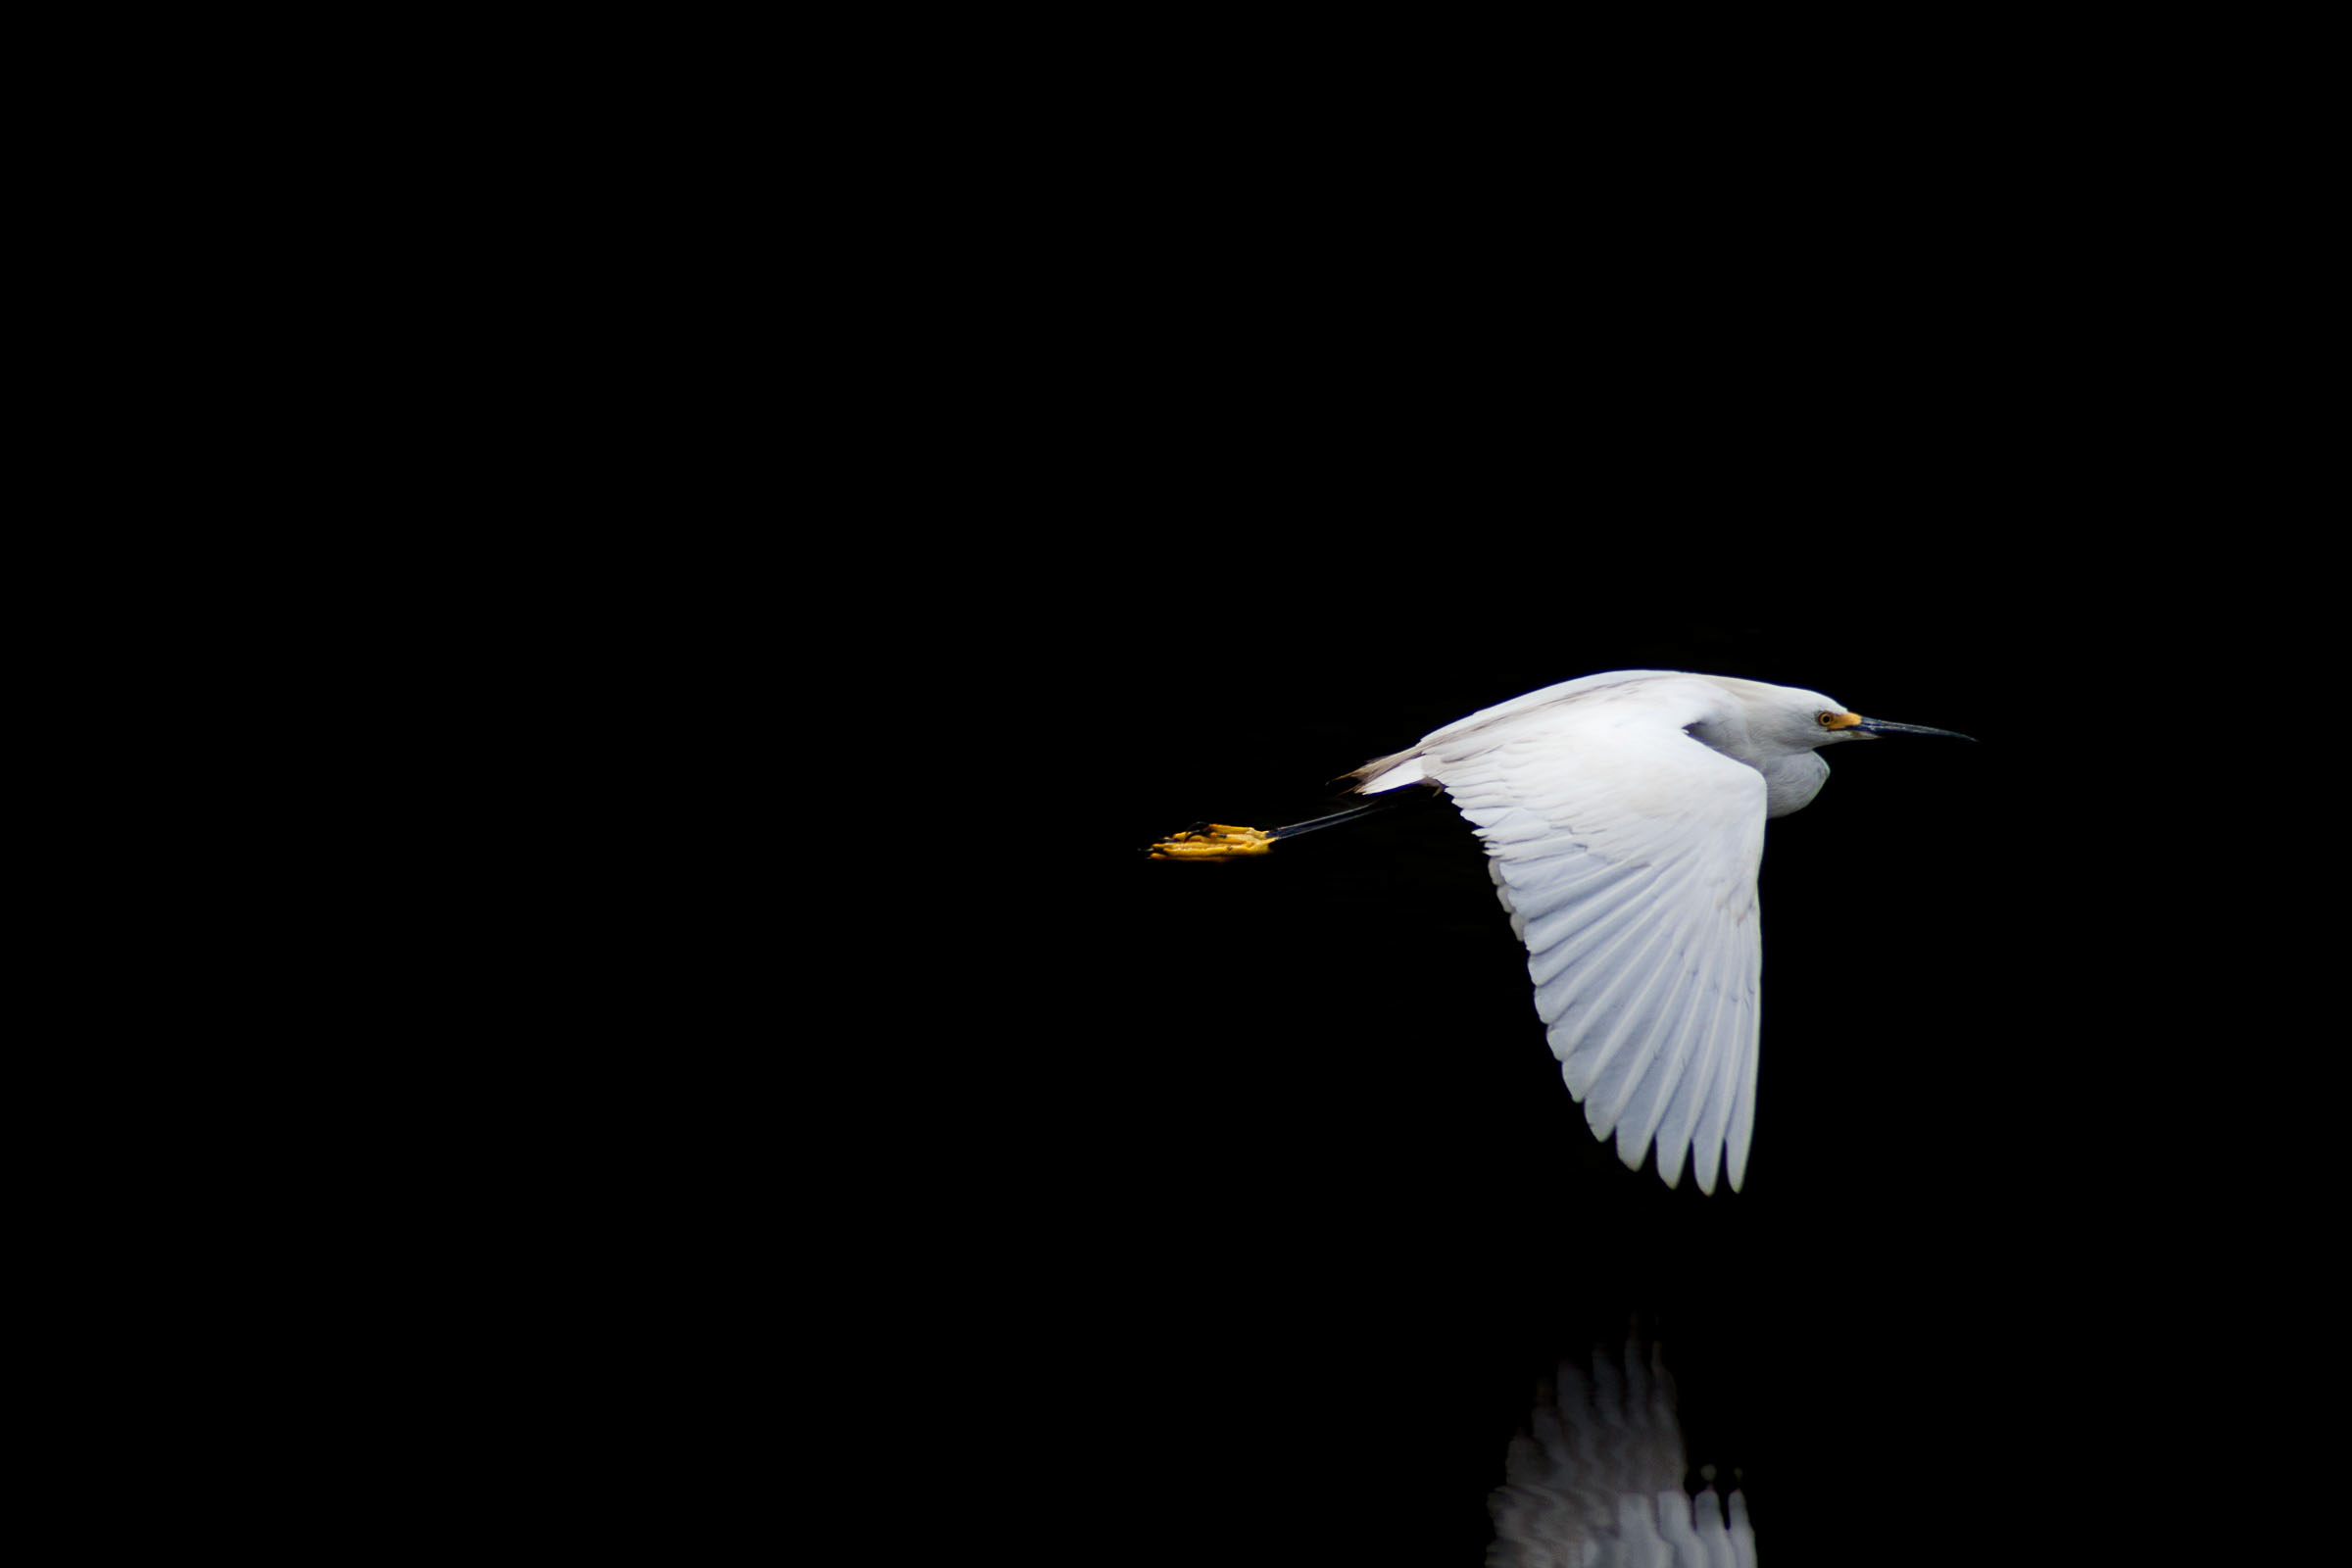 Snowy Egret in flight against a black background.